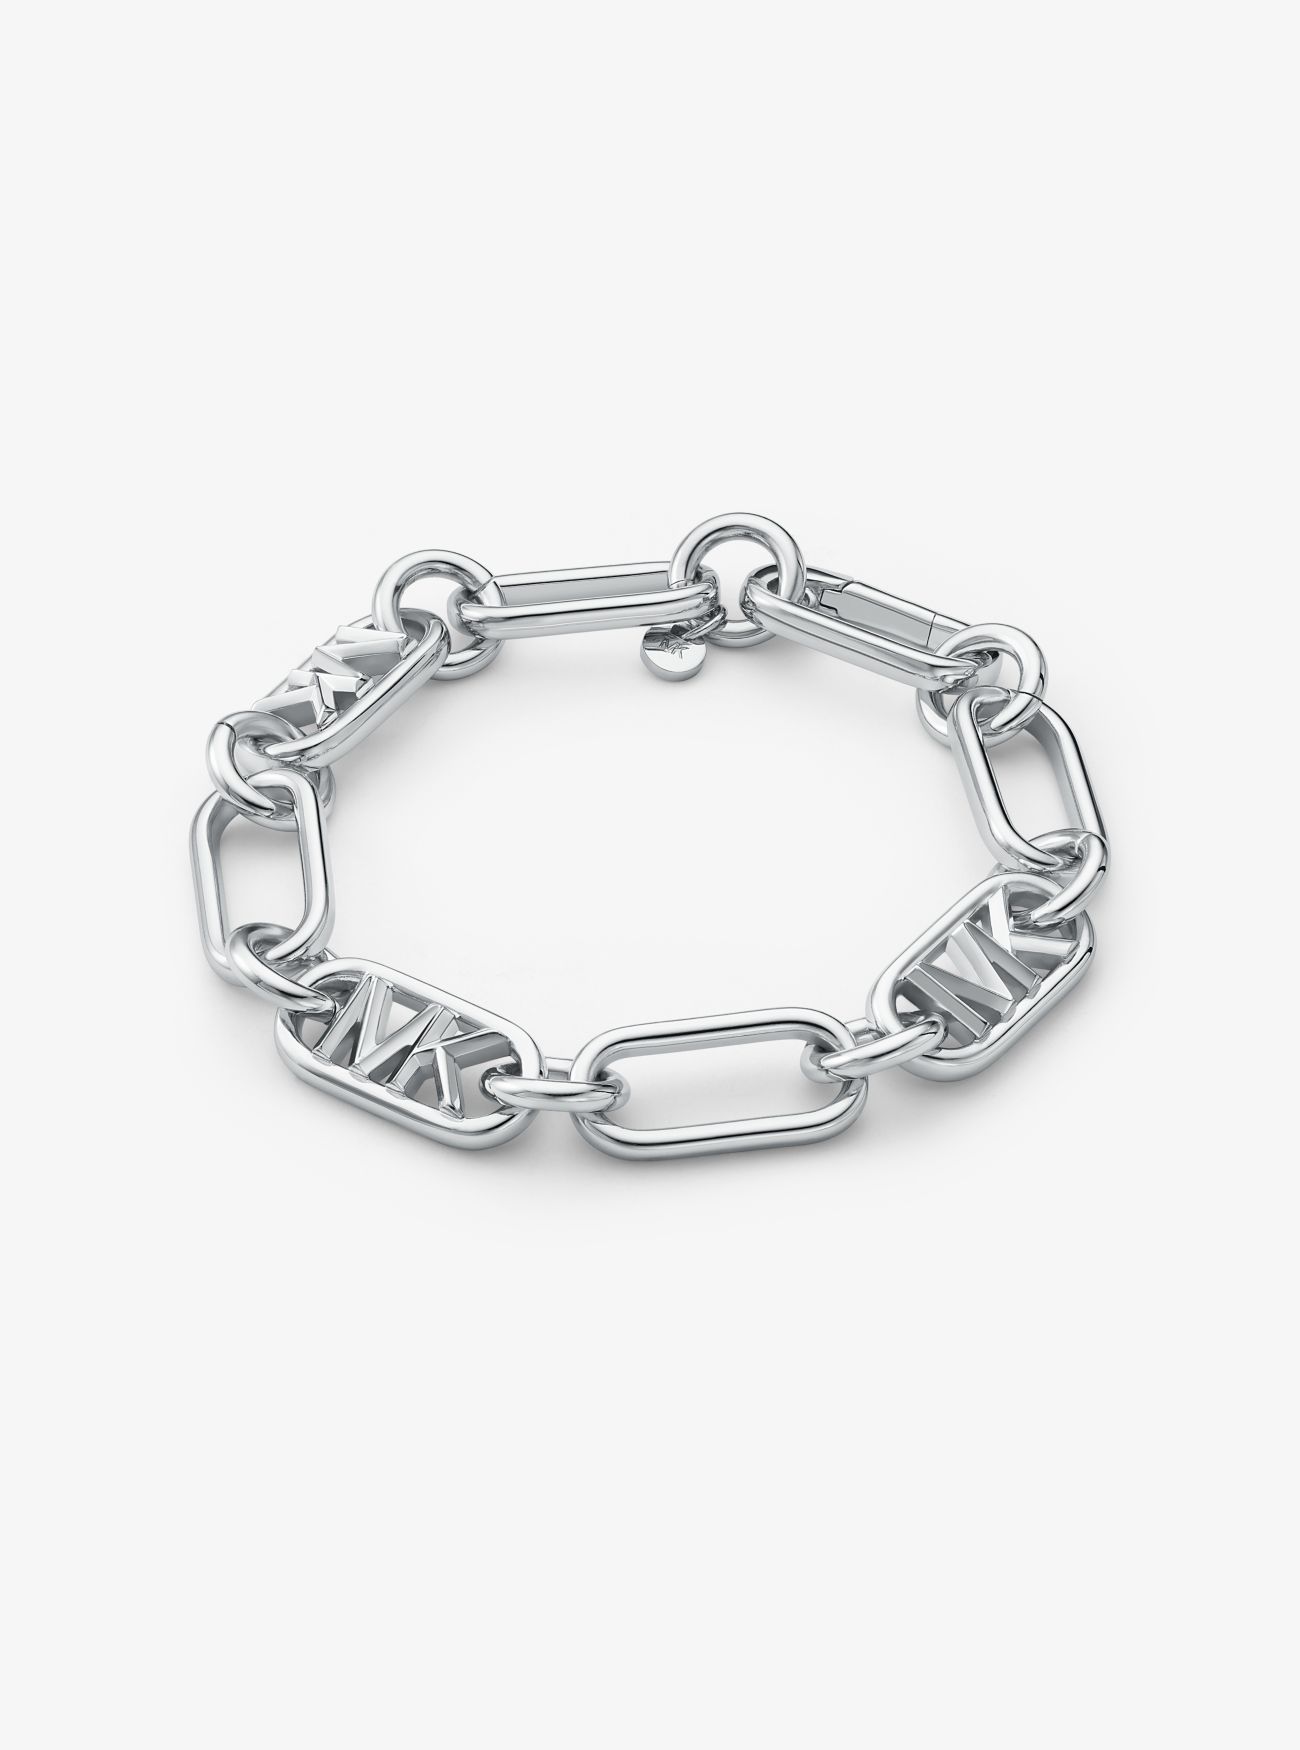 MK Precious Metal-Plated Brass Chain Link Bracelet - Silver - Michael Kors